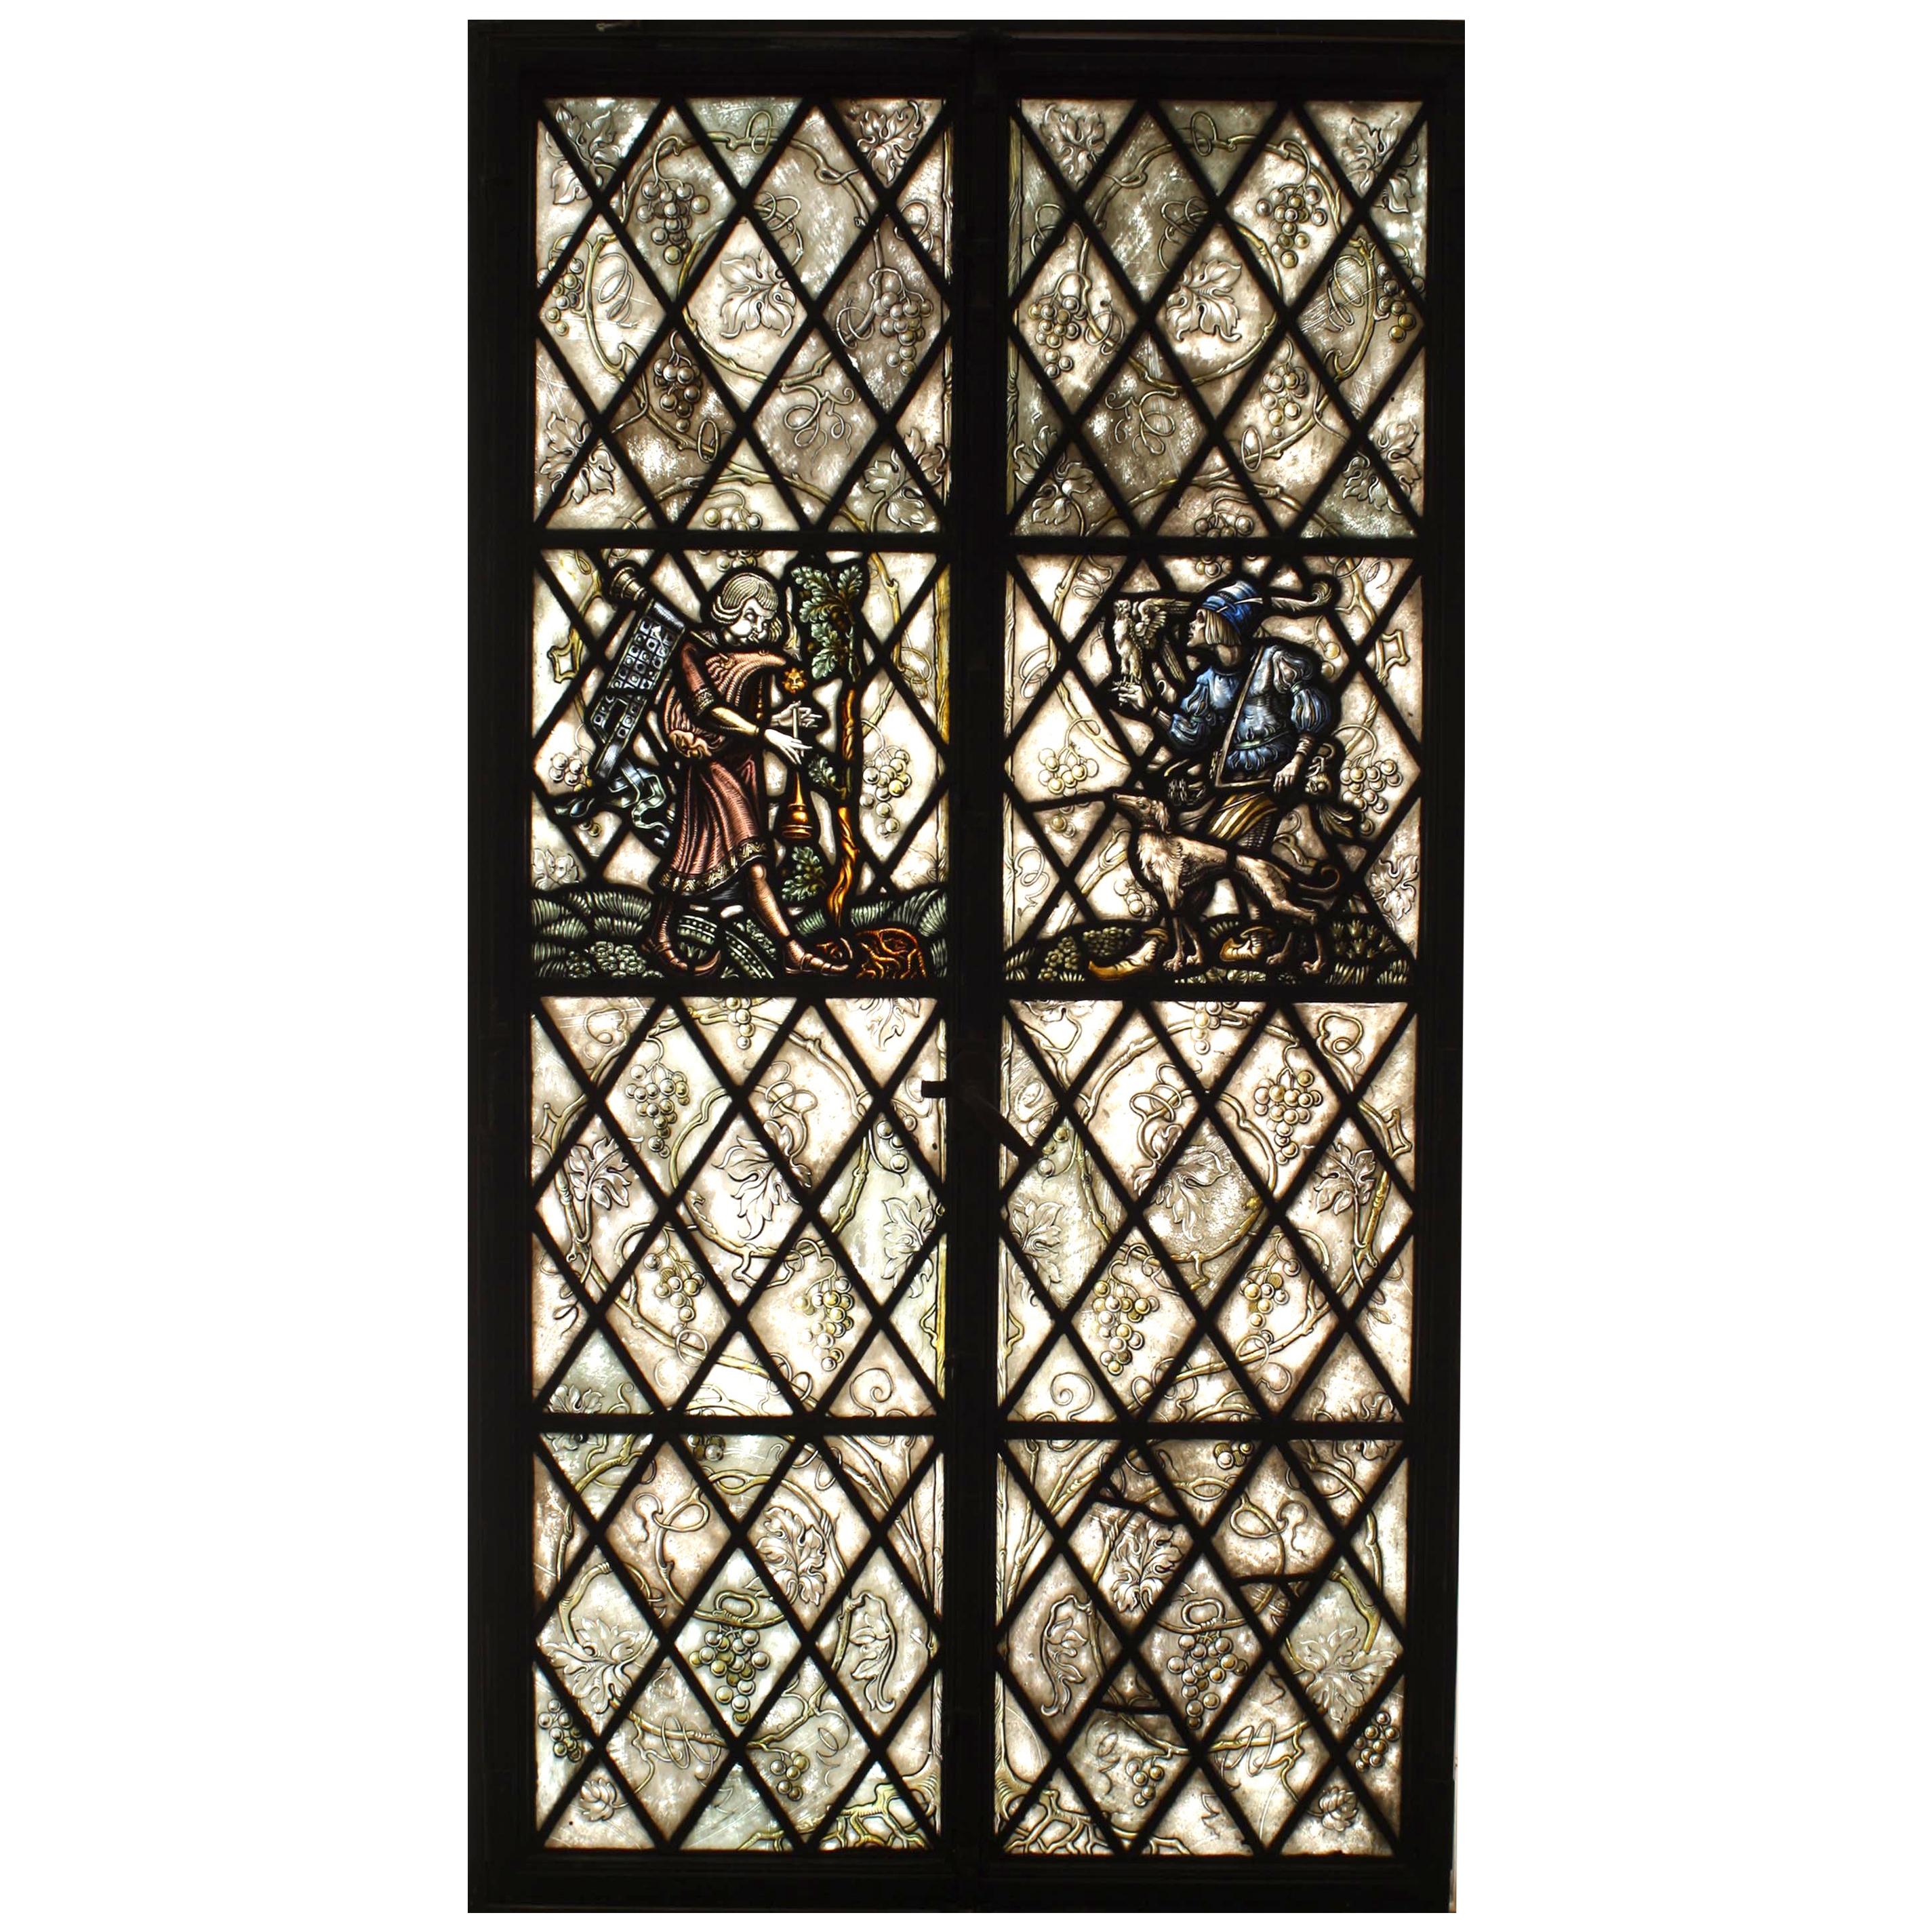 Pair of English Renaissance Style Painted Glass Windows